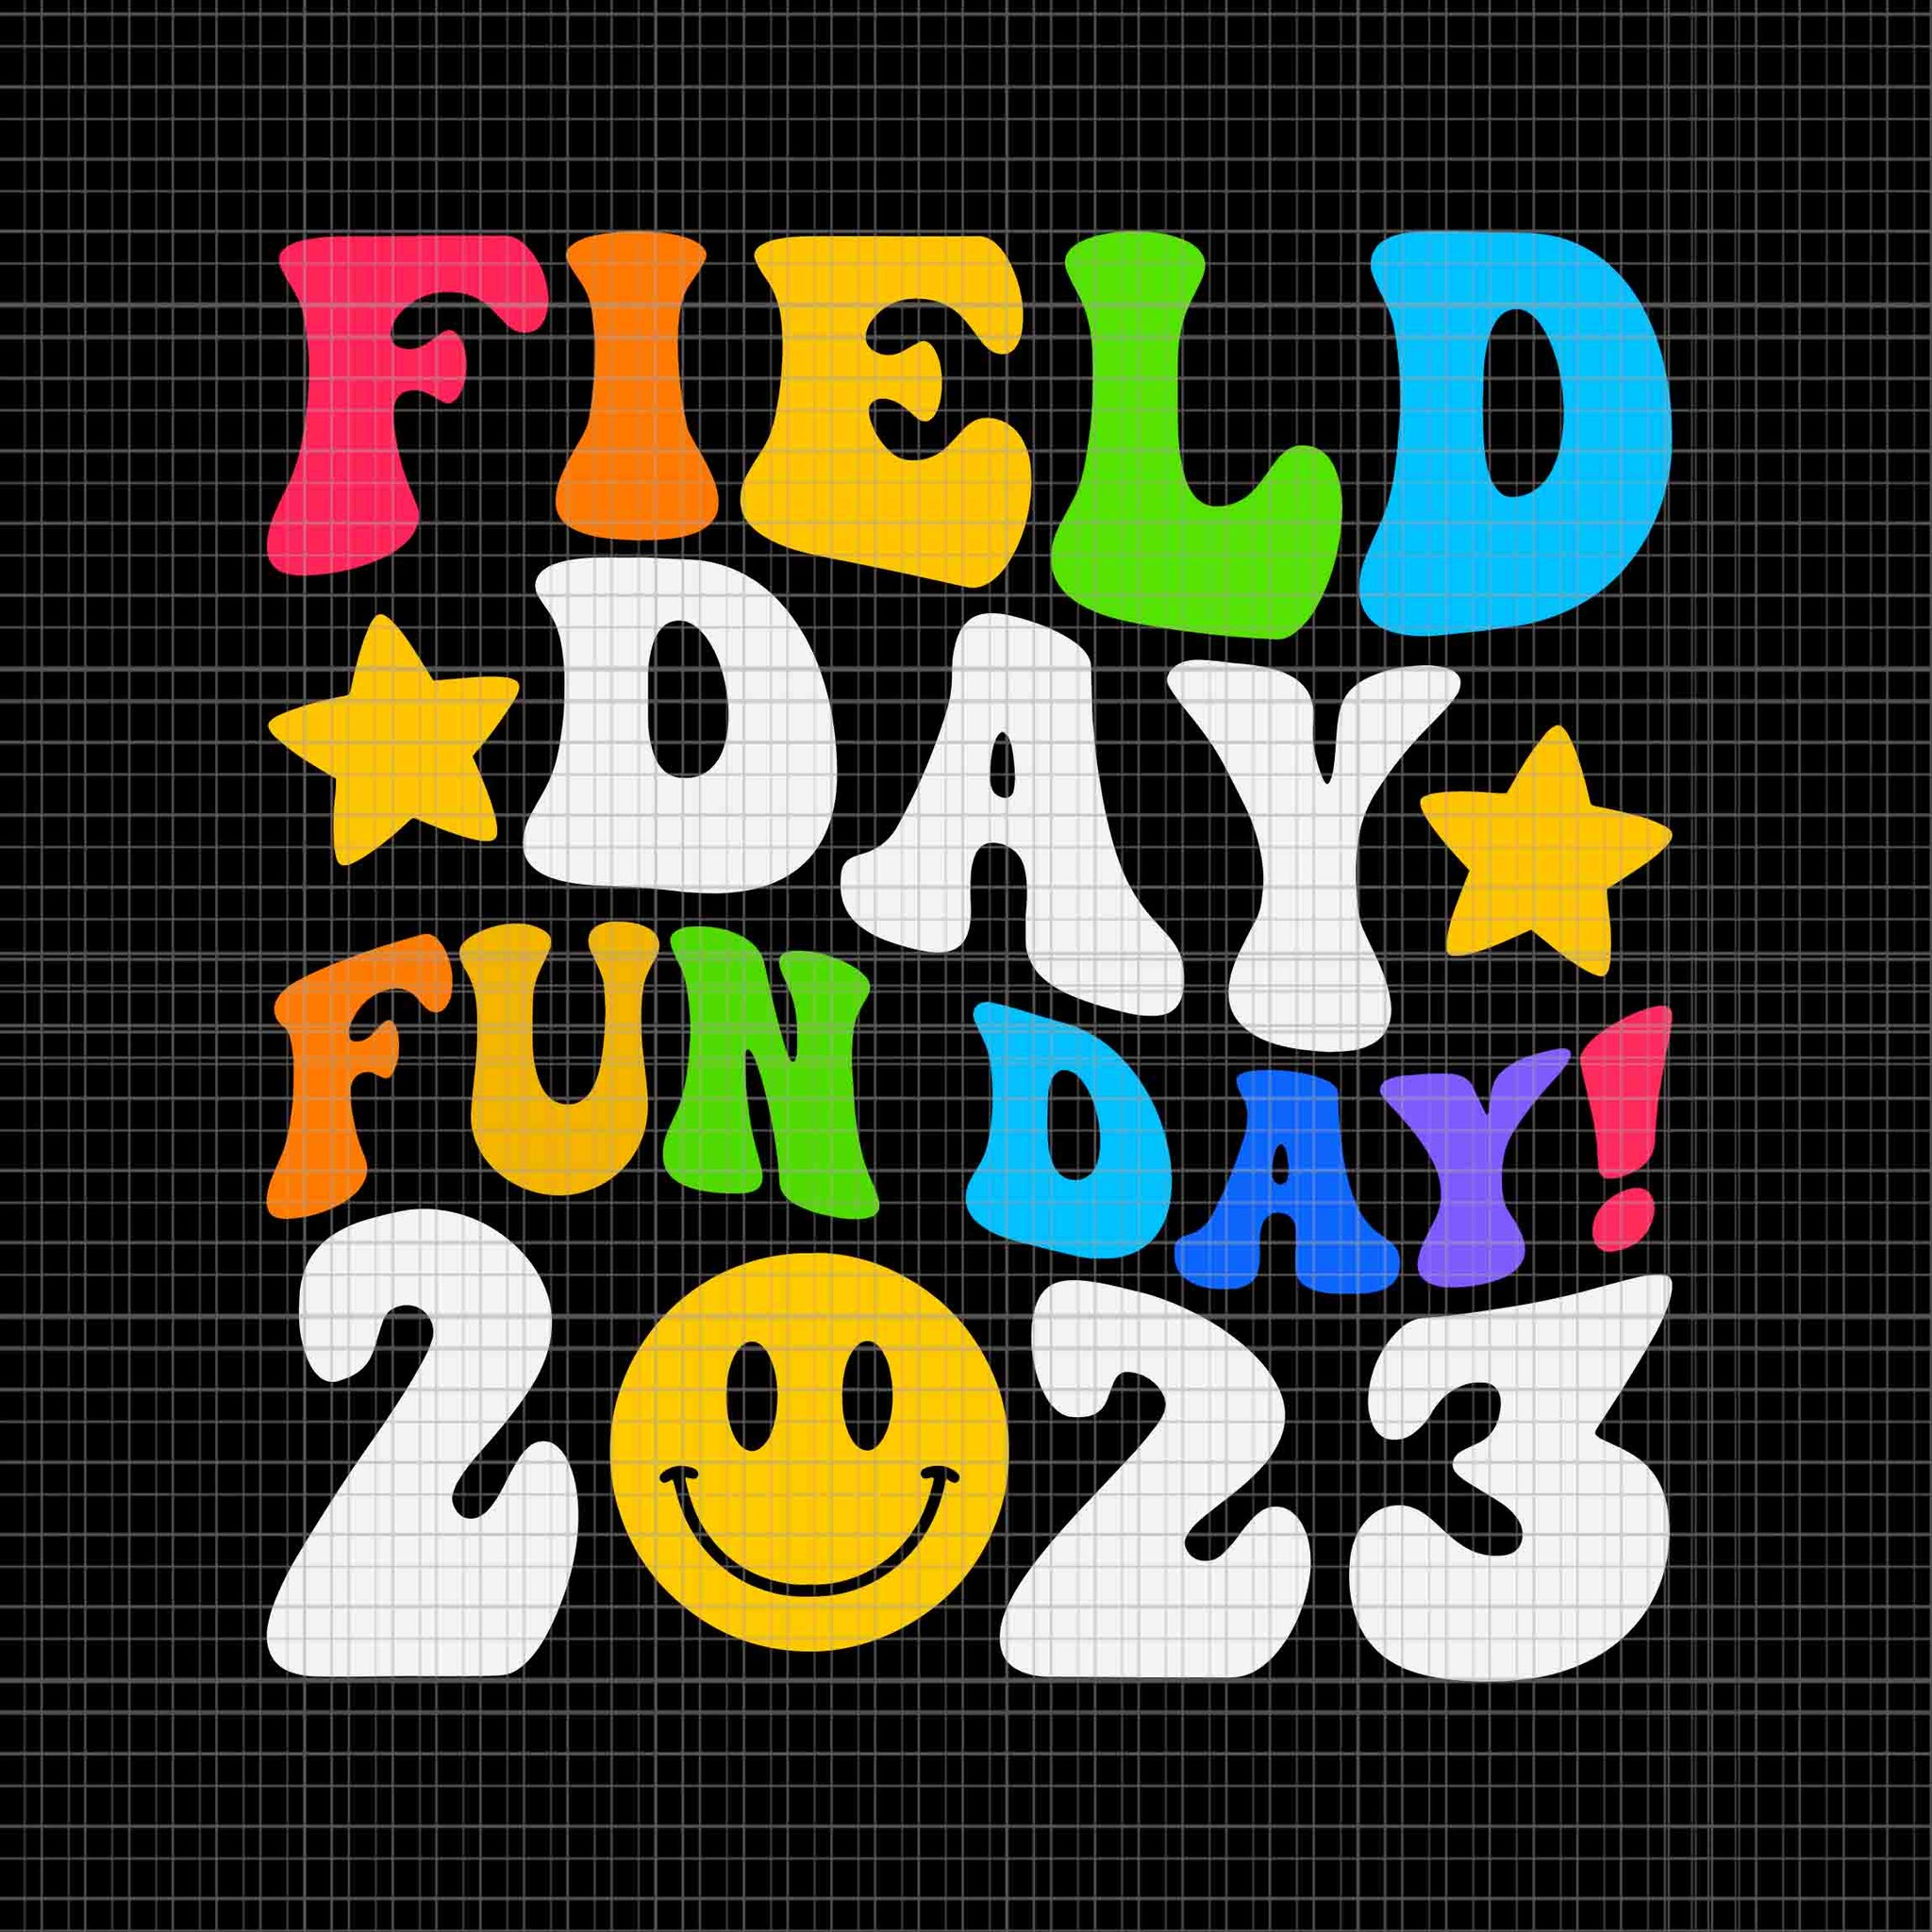 Field Day Fun Day 2023 Svg, Smile Face Student Svg, Last Day Of School Teacher Svg, Teacher Life Svg, Day Of School Svg, Techerlife Svg